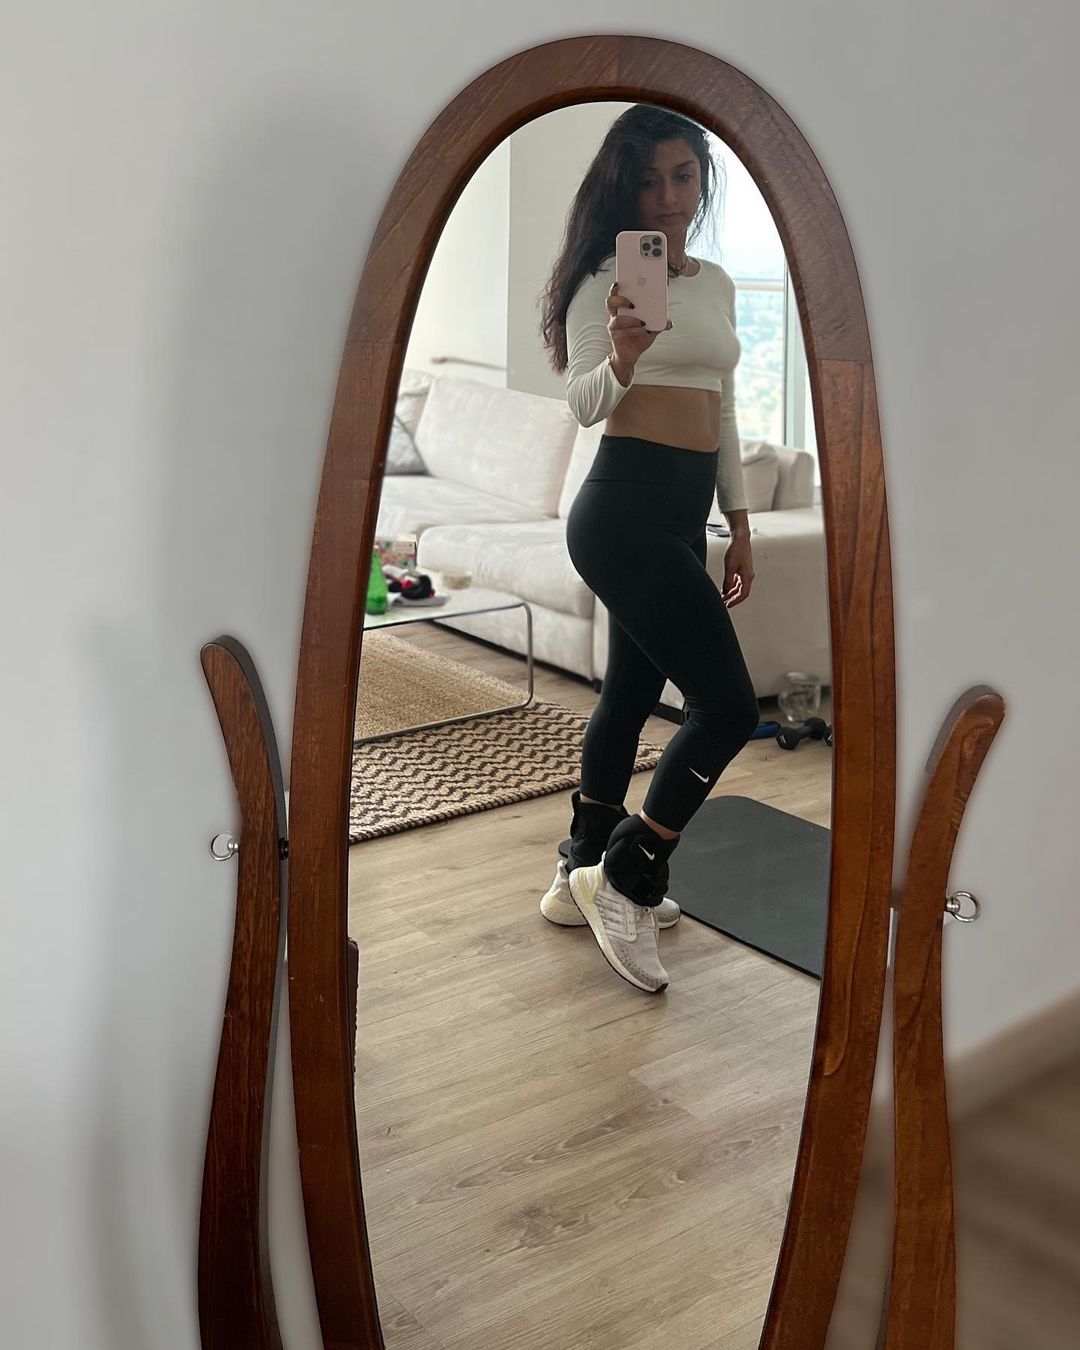 Meera Jasmine mirror selfie 